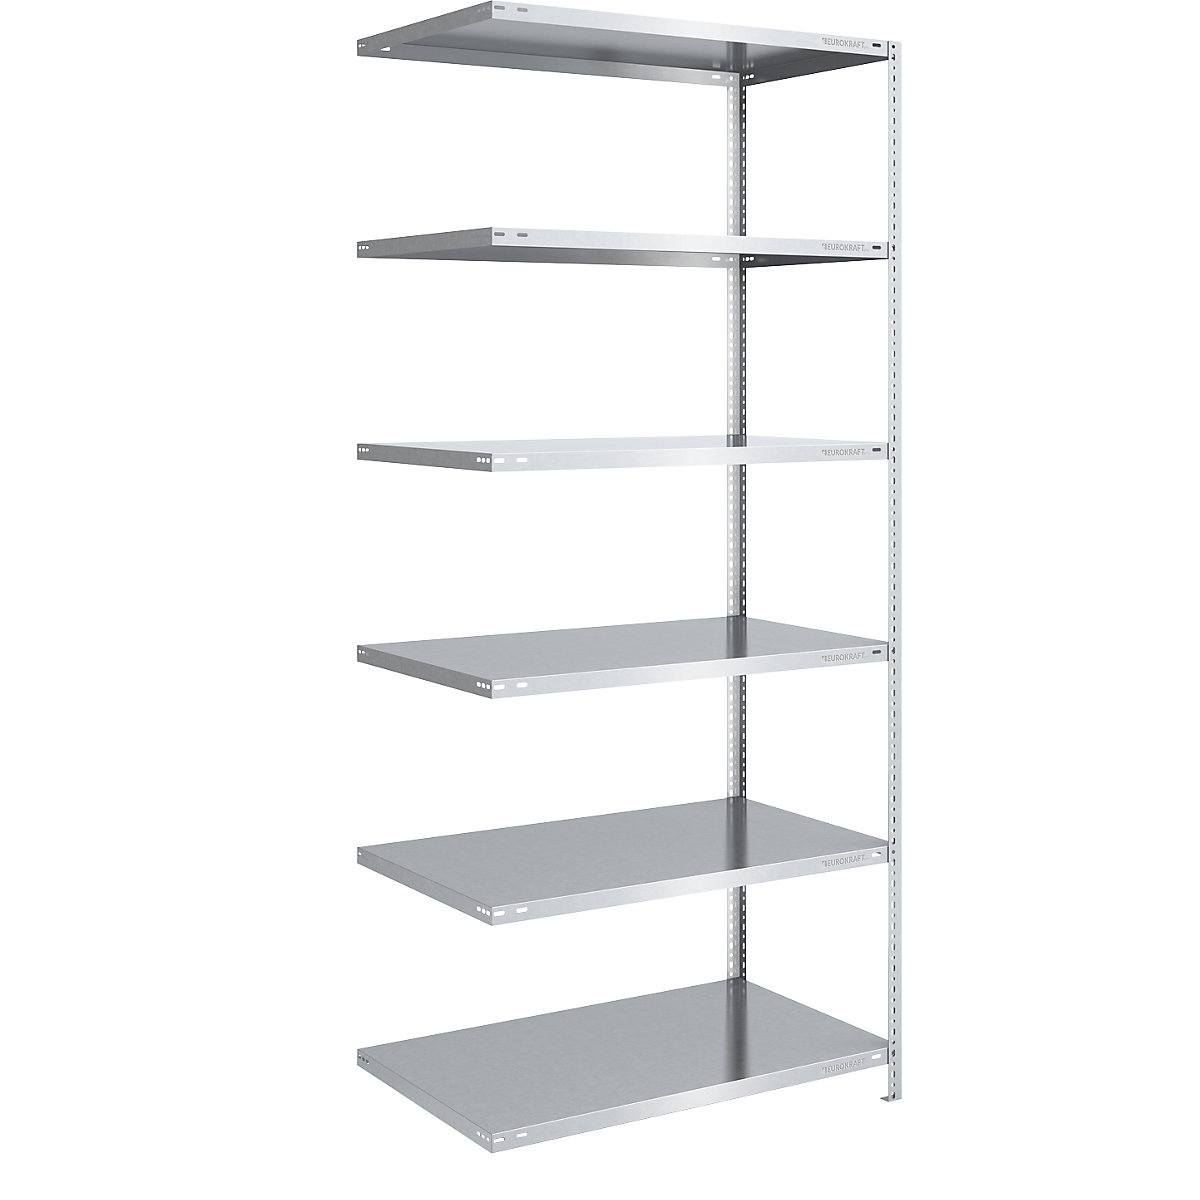 Bolt-together shelf unit, light duty, zinc plated – eurokraft pro, shelf unit height 2500 mm, shelf width 1000 mm, depth 800 mm, extension shelf unit-12